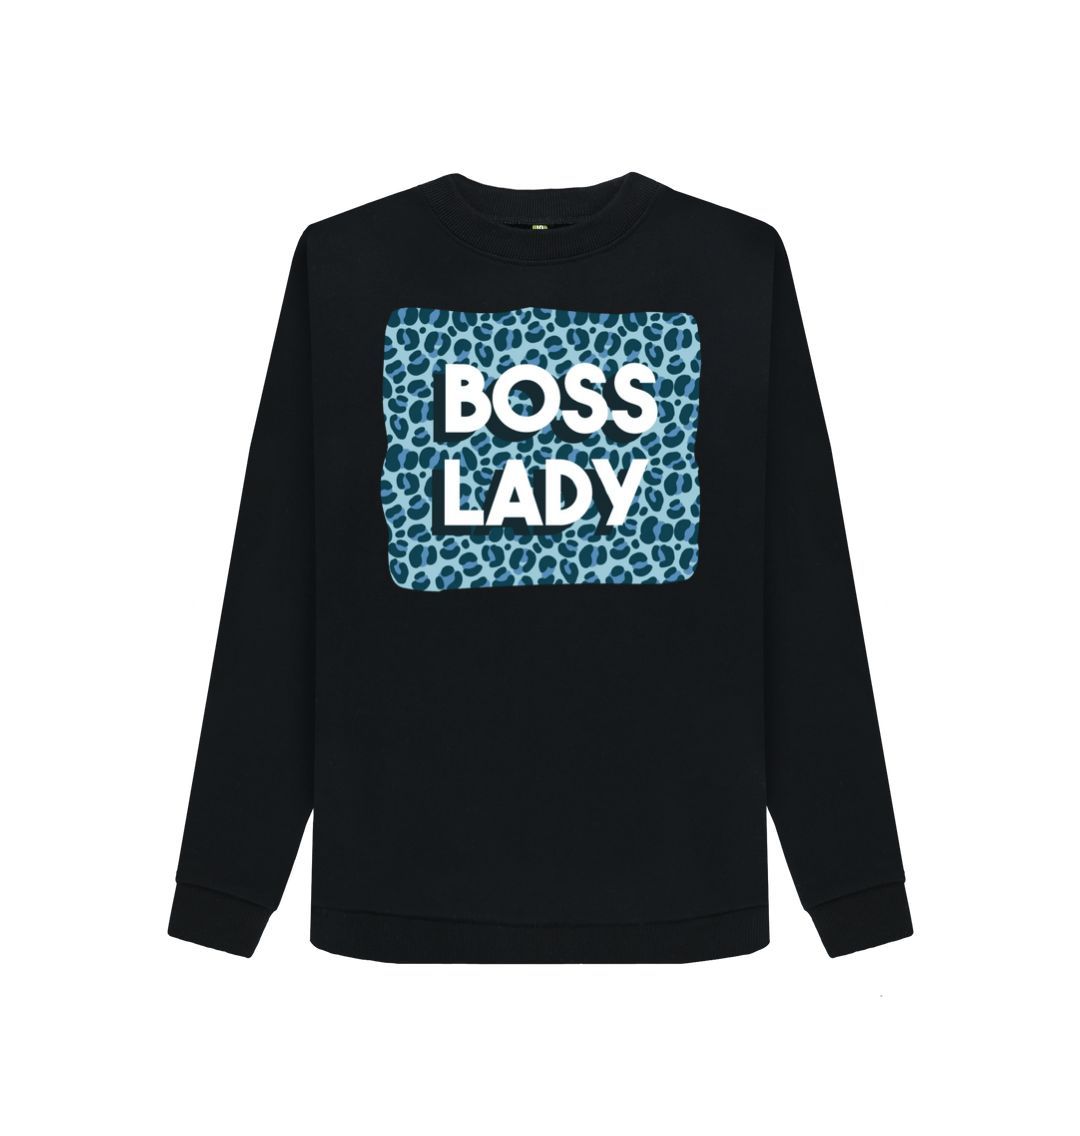 Black Boss Lady Women's Crewneck Sweater